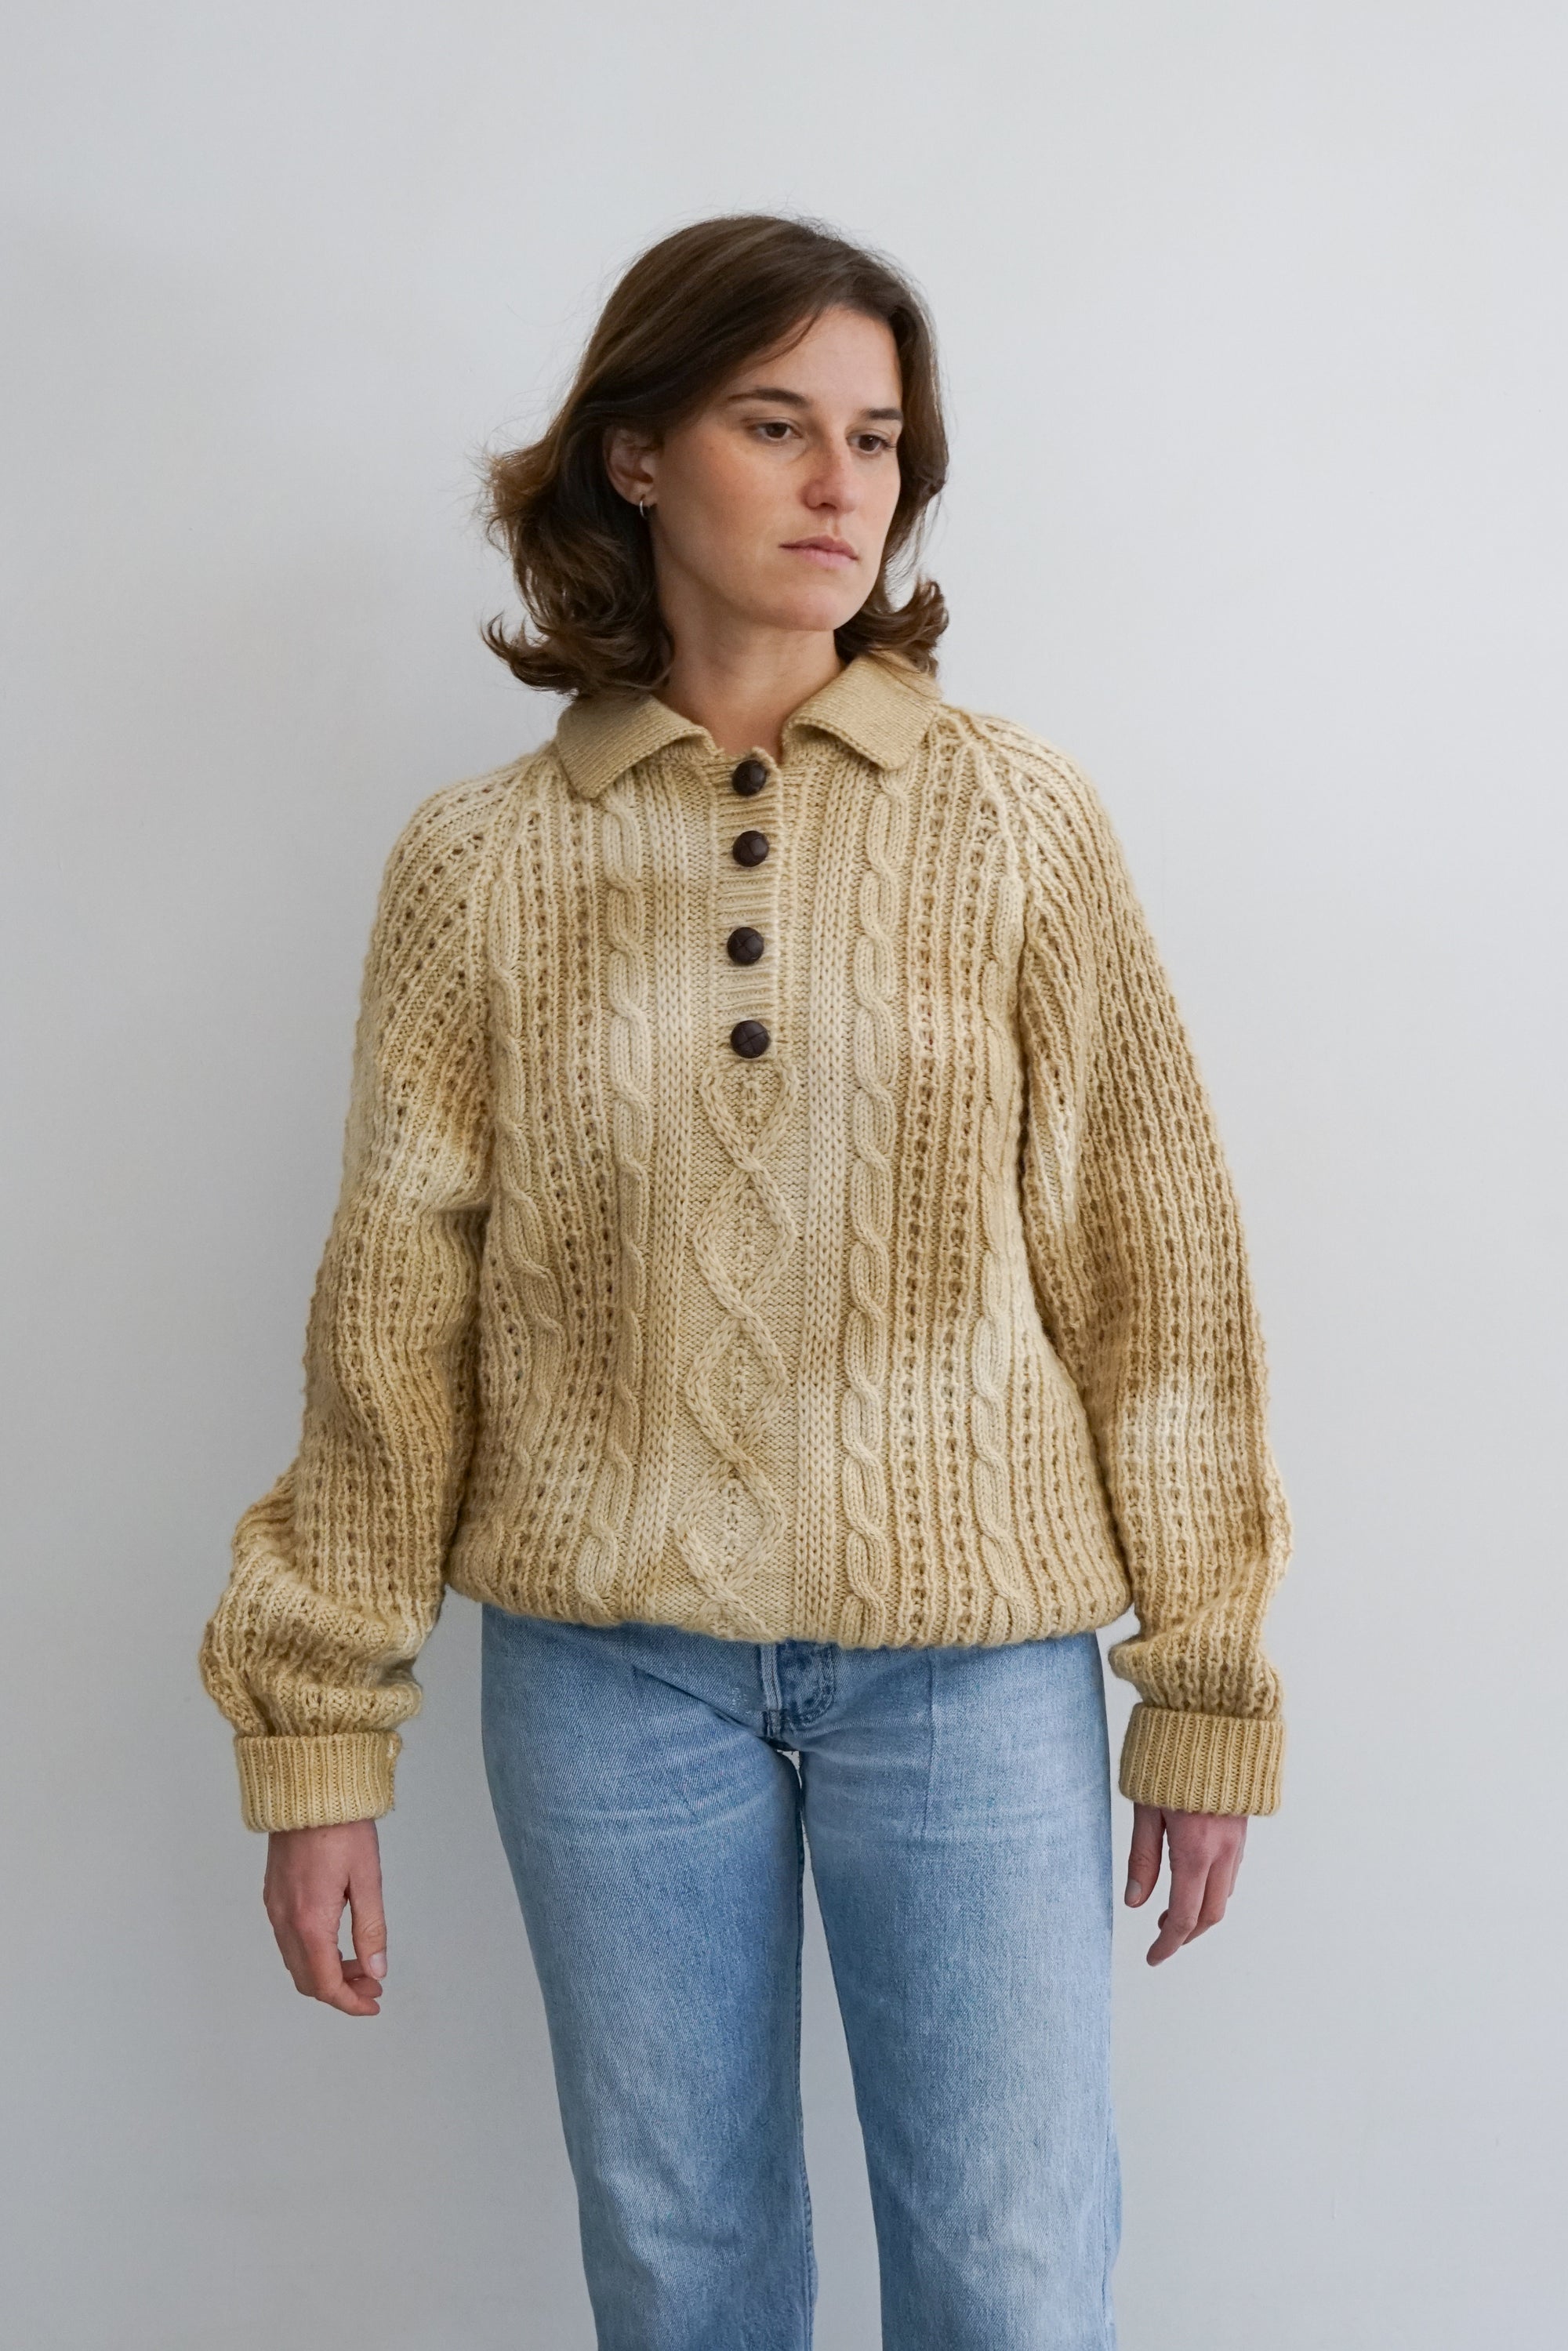 Marigold Dye Vintage Fisherman Knit Sweater